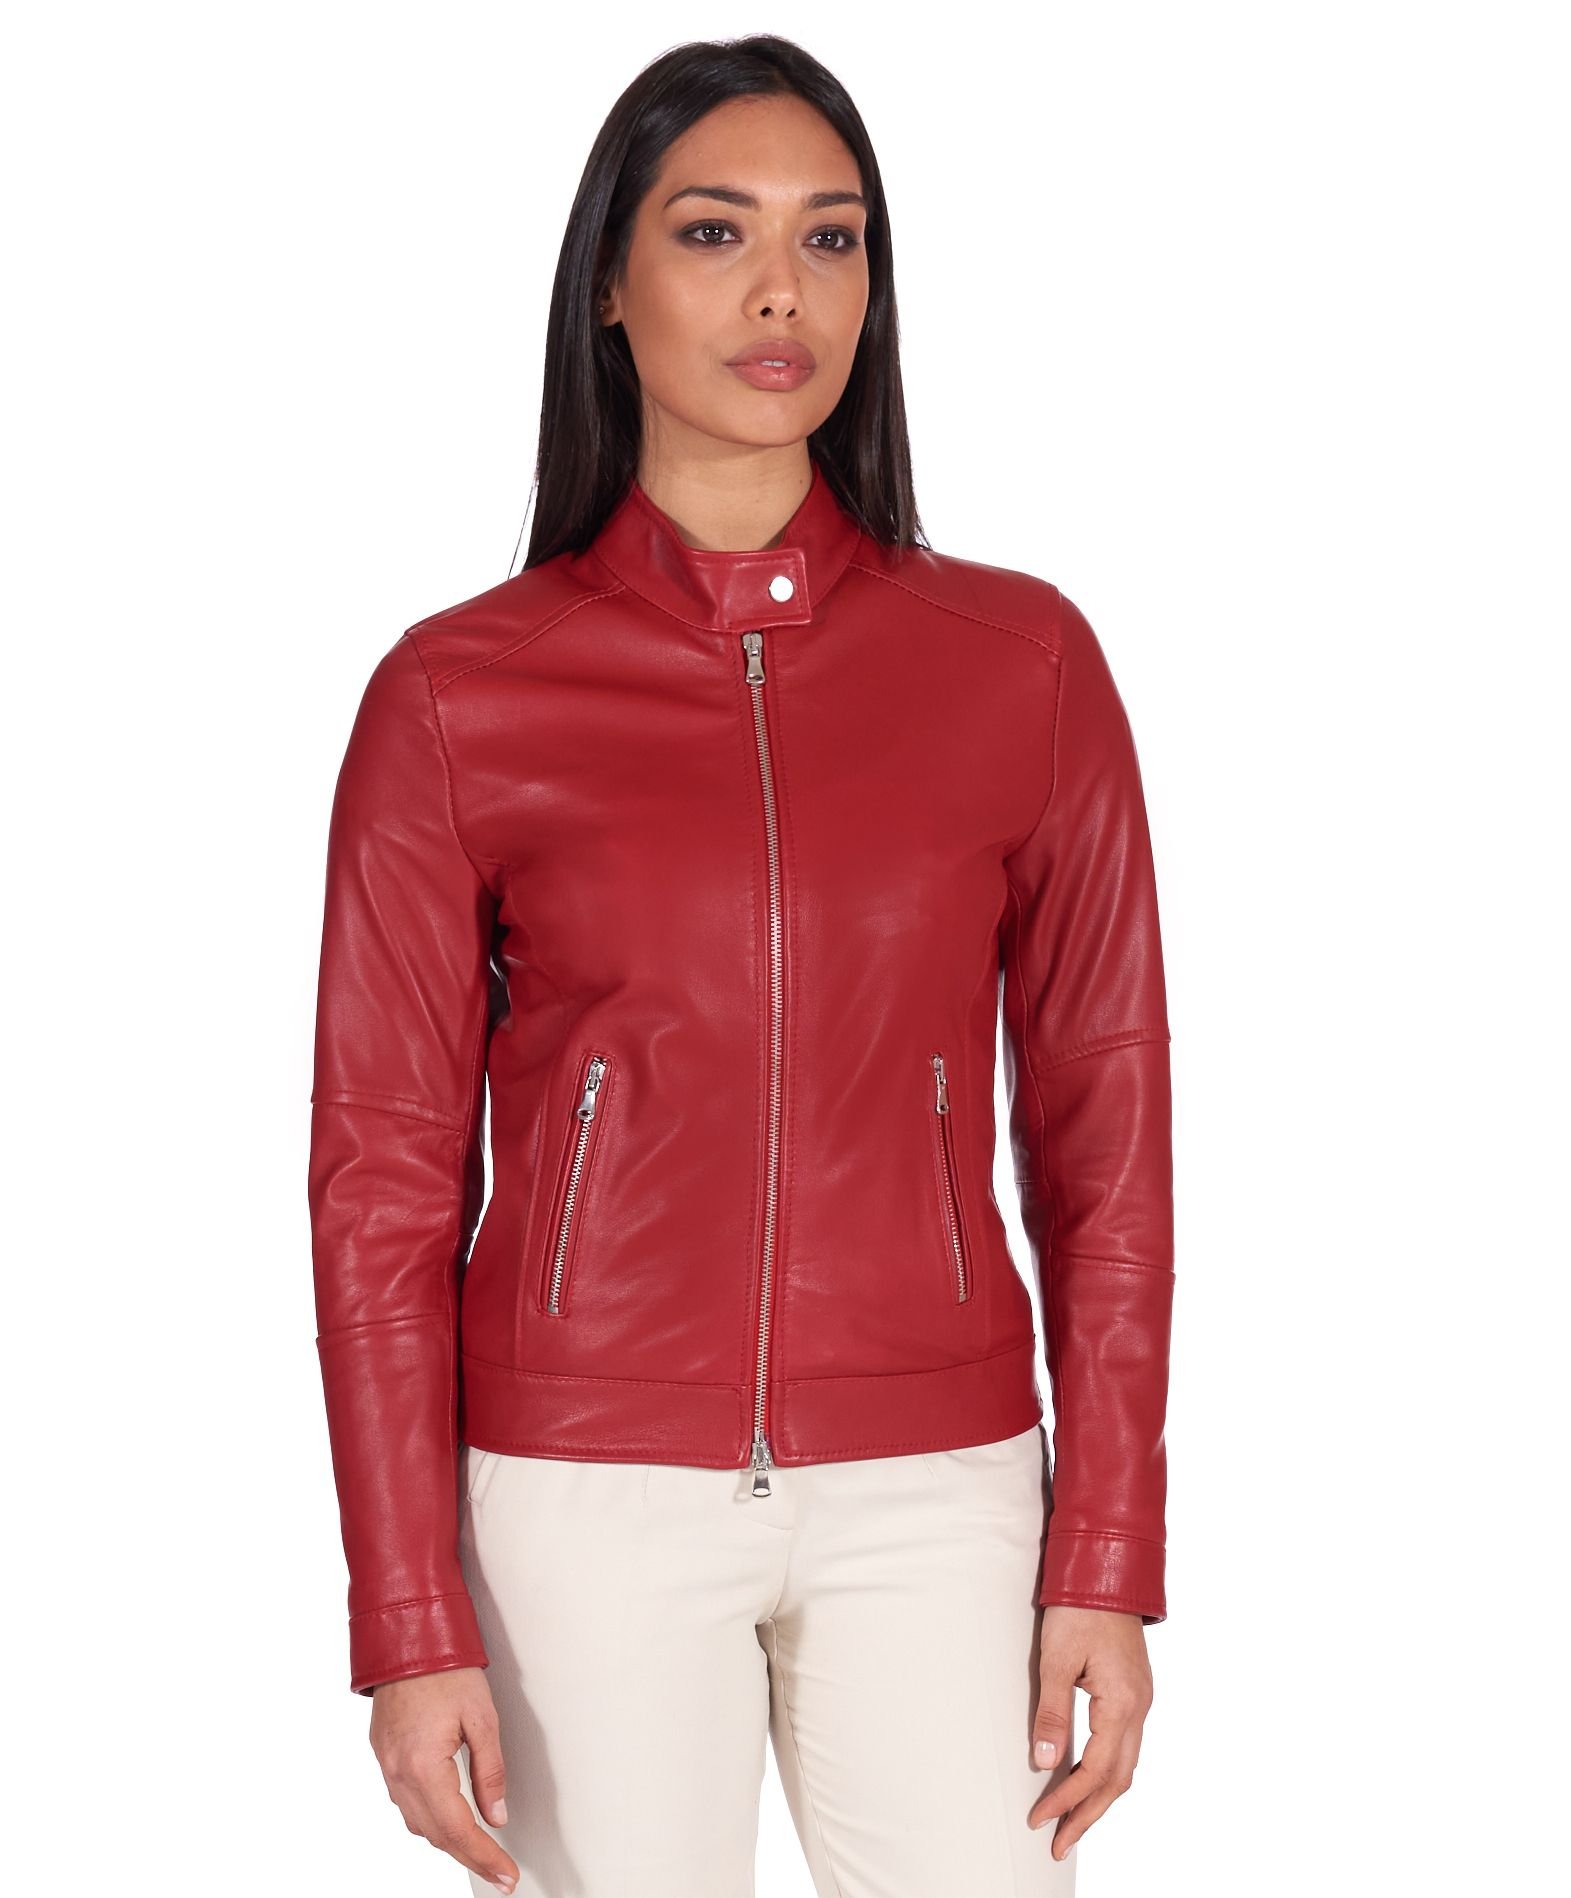 Leather biker jacket women leather jacket for girls red leather jacket ...